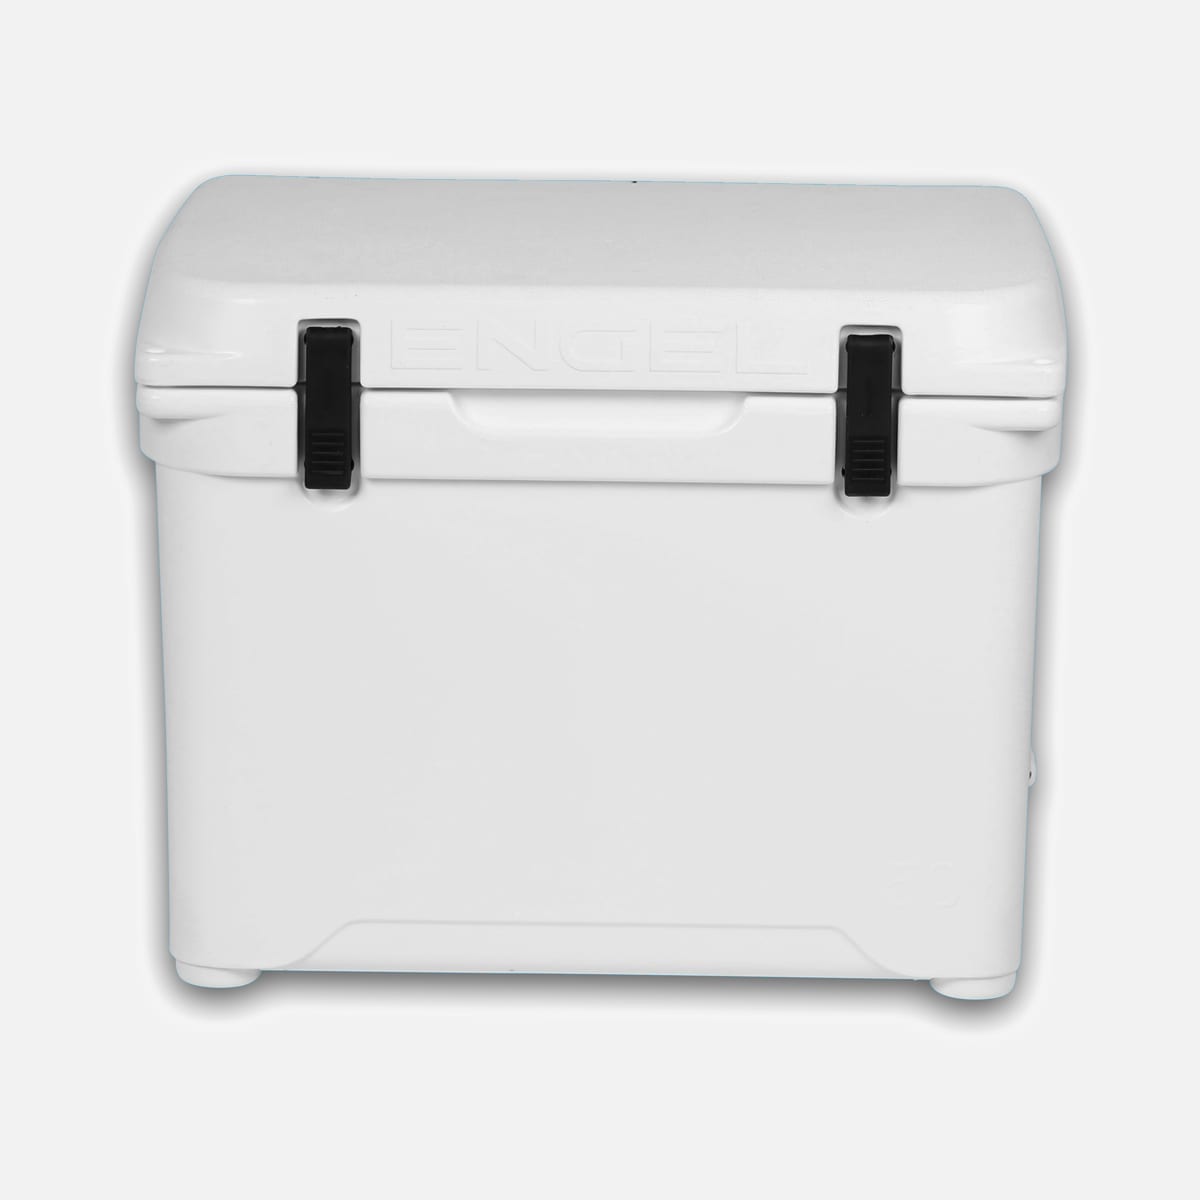 Engel Ice Box 45LT - WHITE Inc Basket